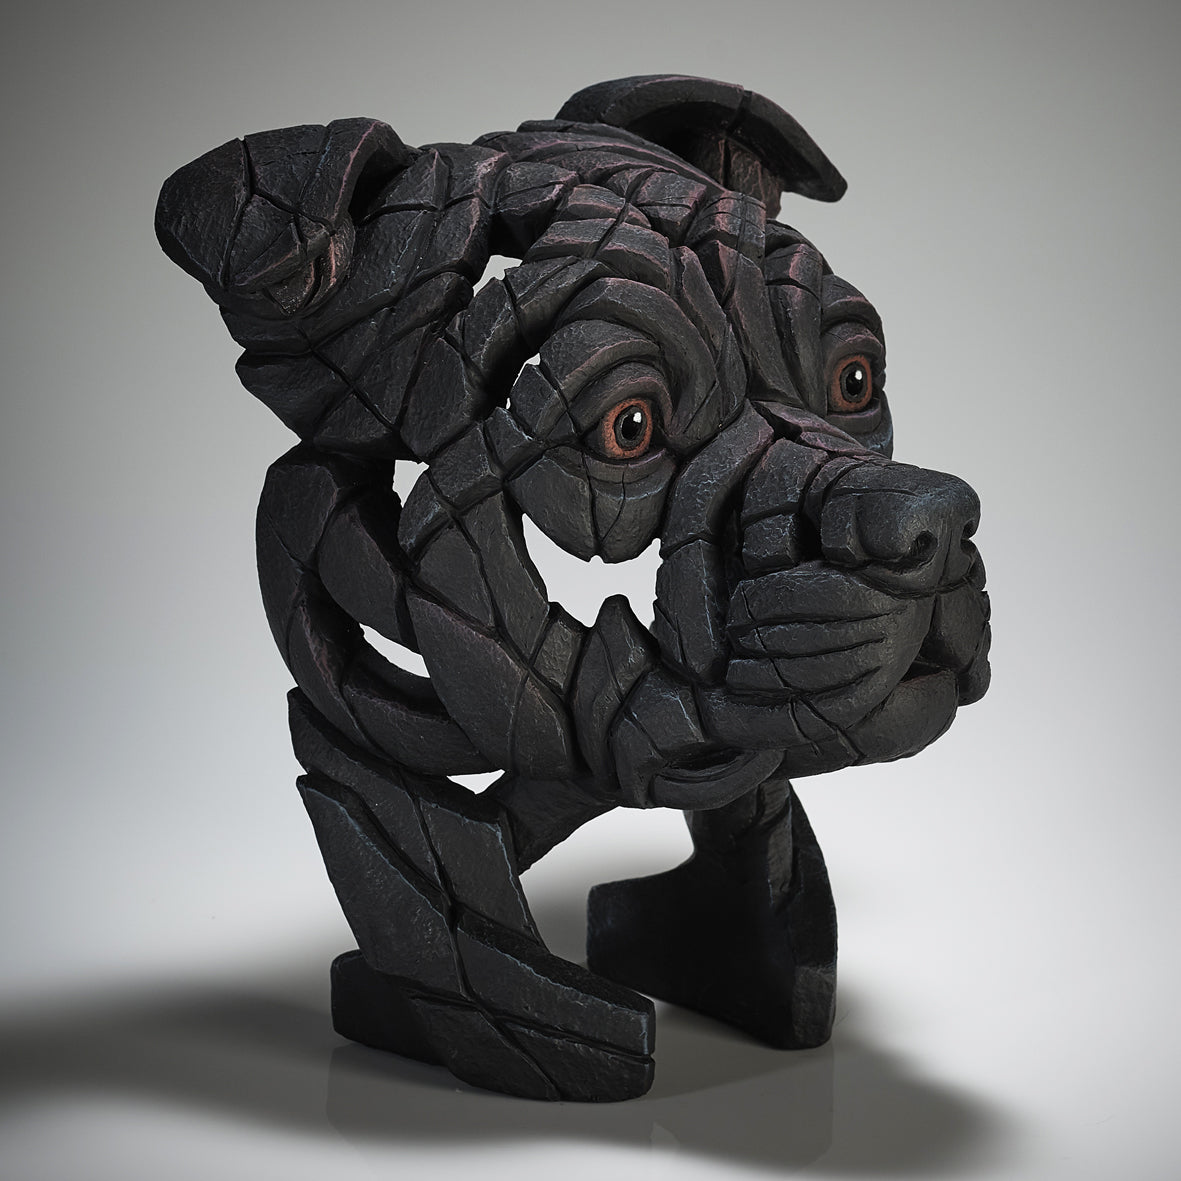 Edge Sculpture Staffordshire Bull Terrier - Black by Matt Buckley